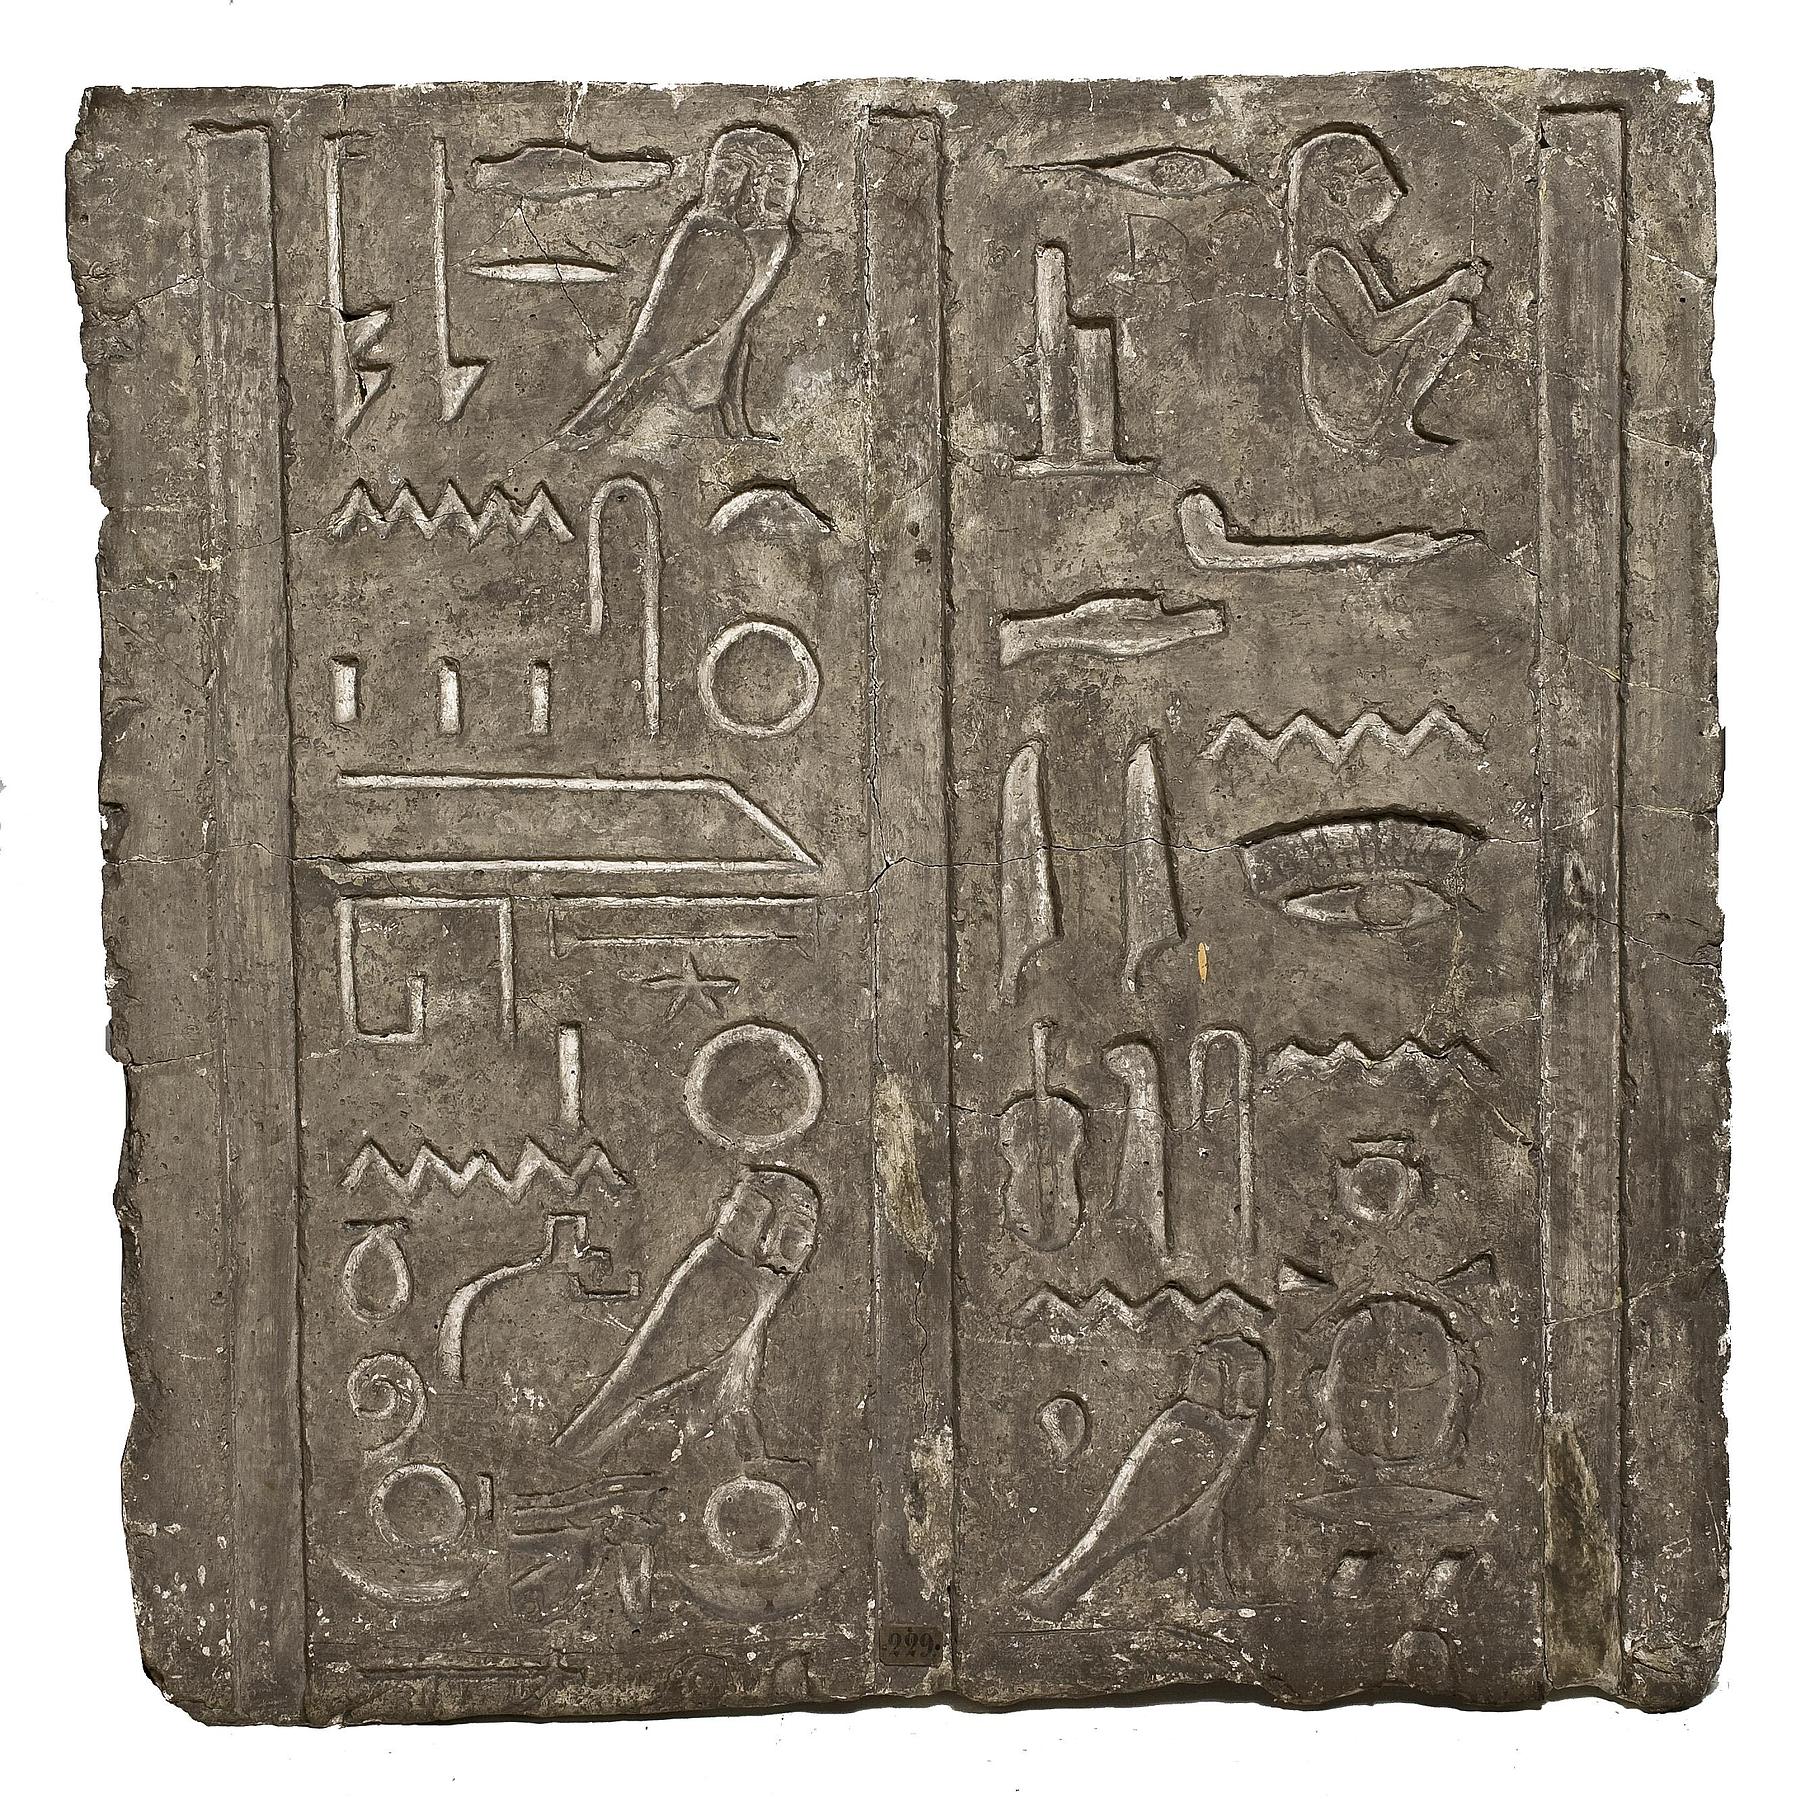 Hieroglyphic inscription, L229